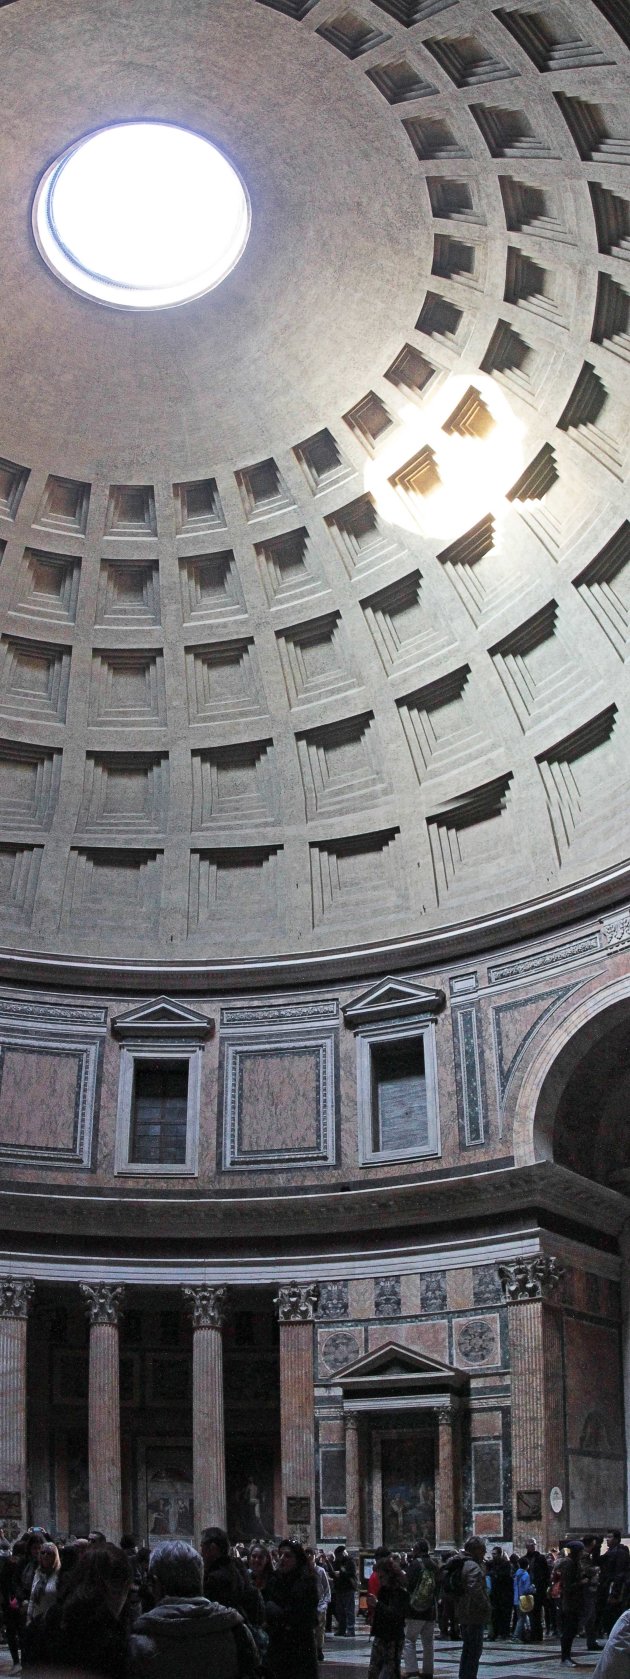 indrukwekkend Pantheon